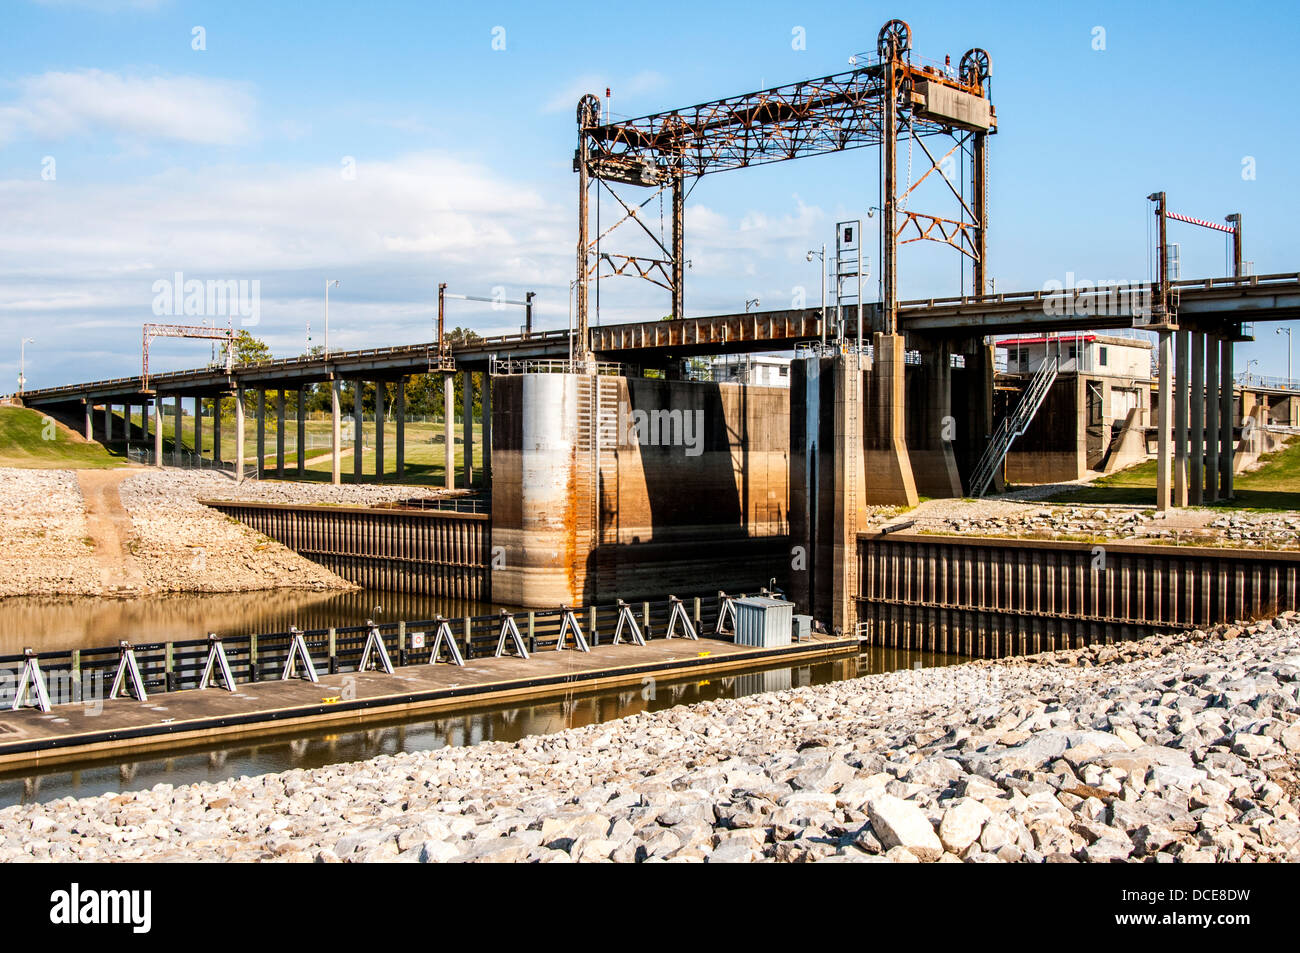 USA, Louisiana, Atchafalaya Basin. Old River Navigational Lock and Bridge, built by the US Army Corps of Engineers. Stock Photo